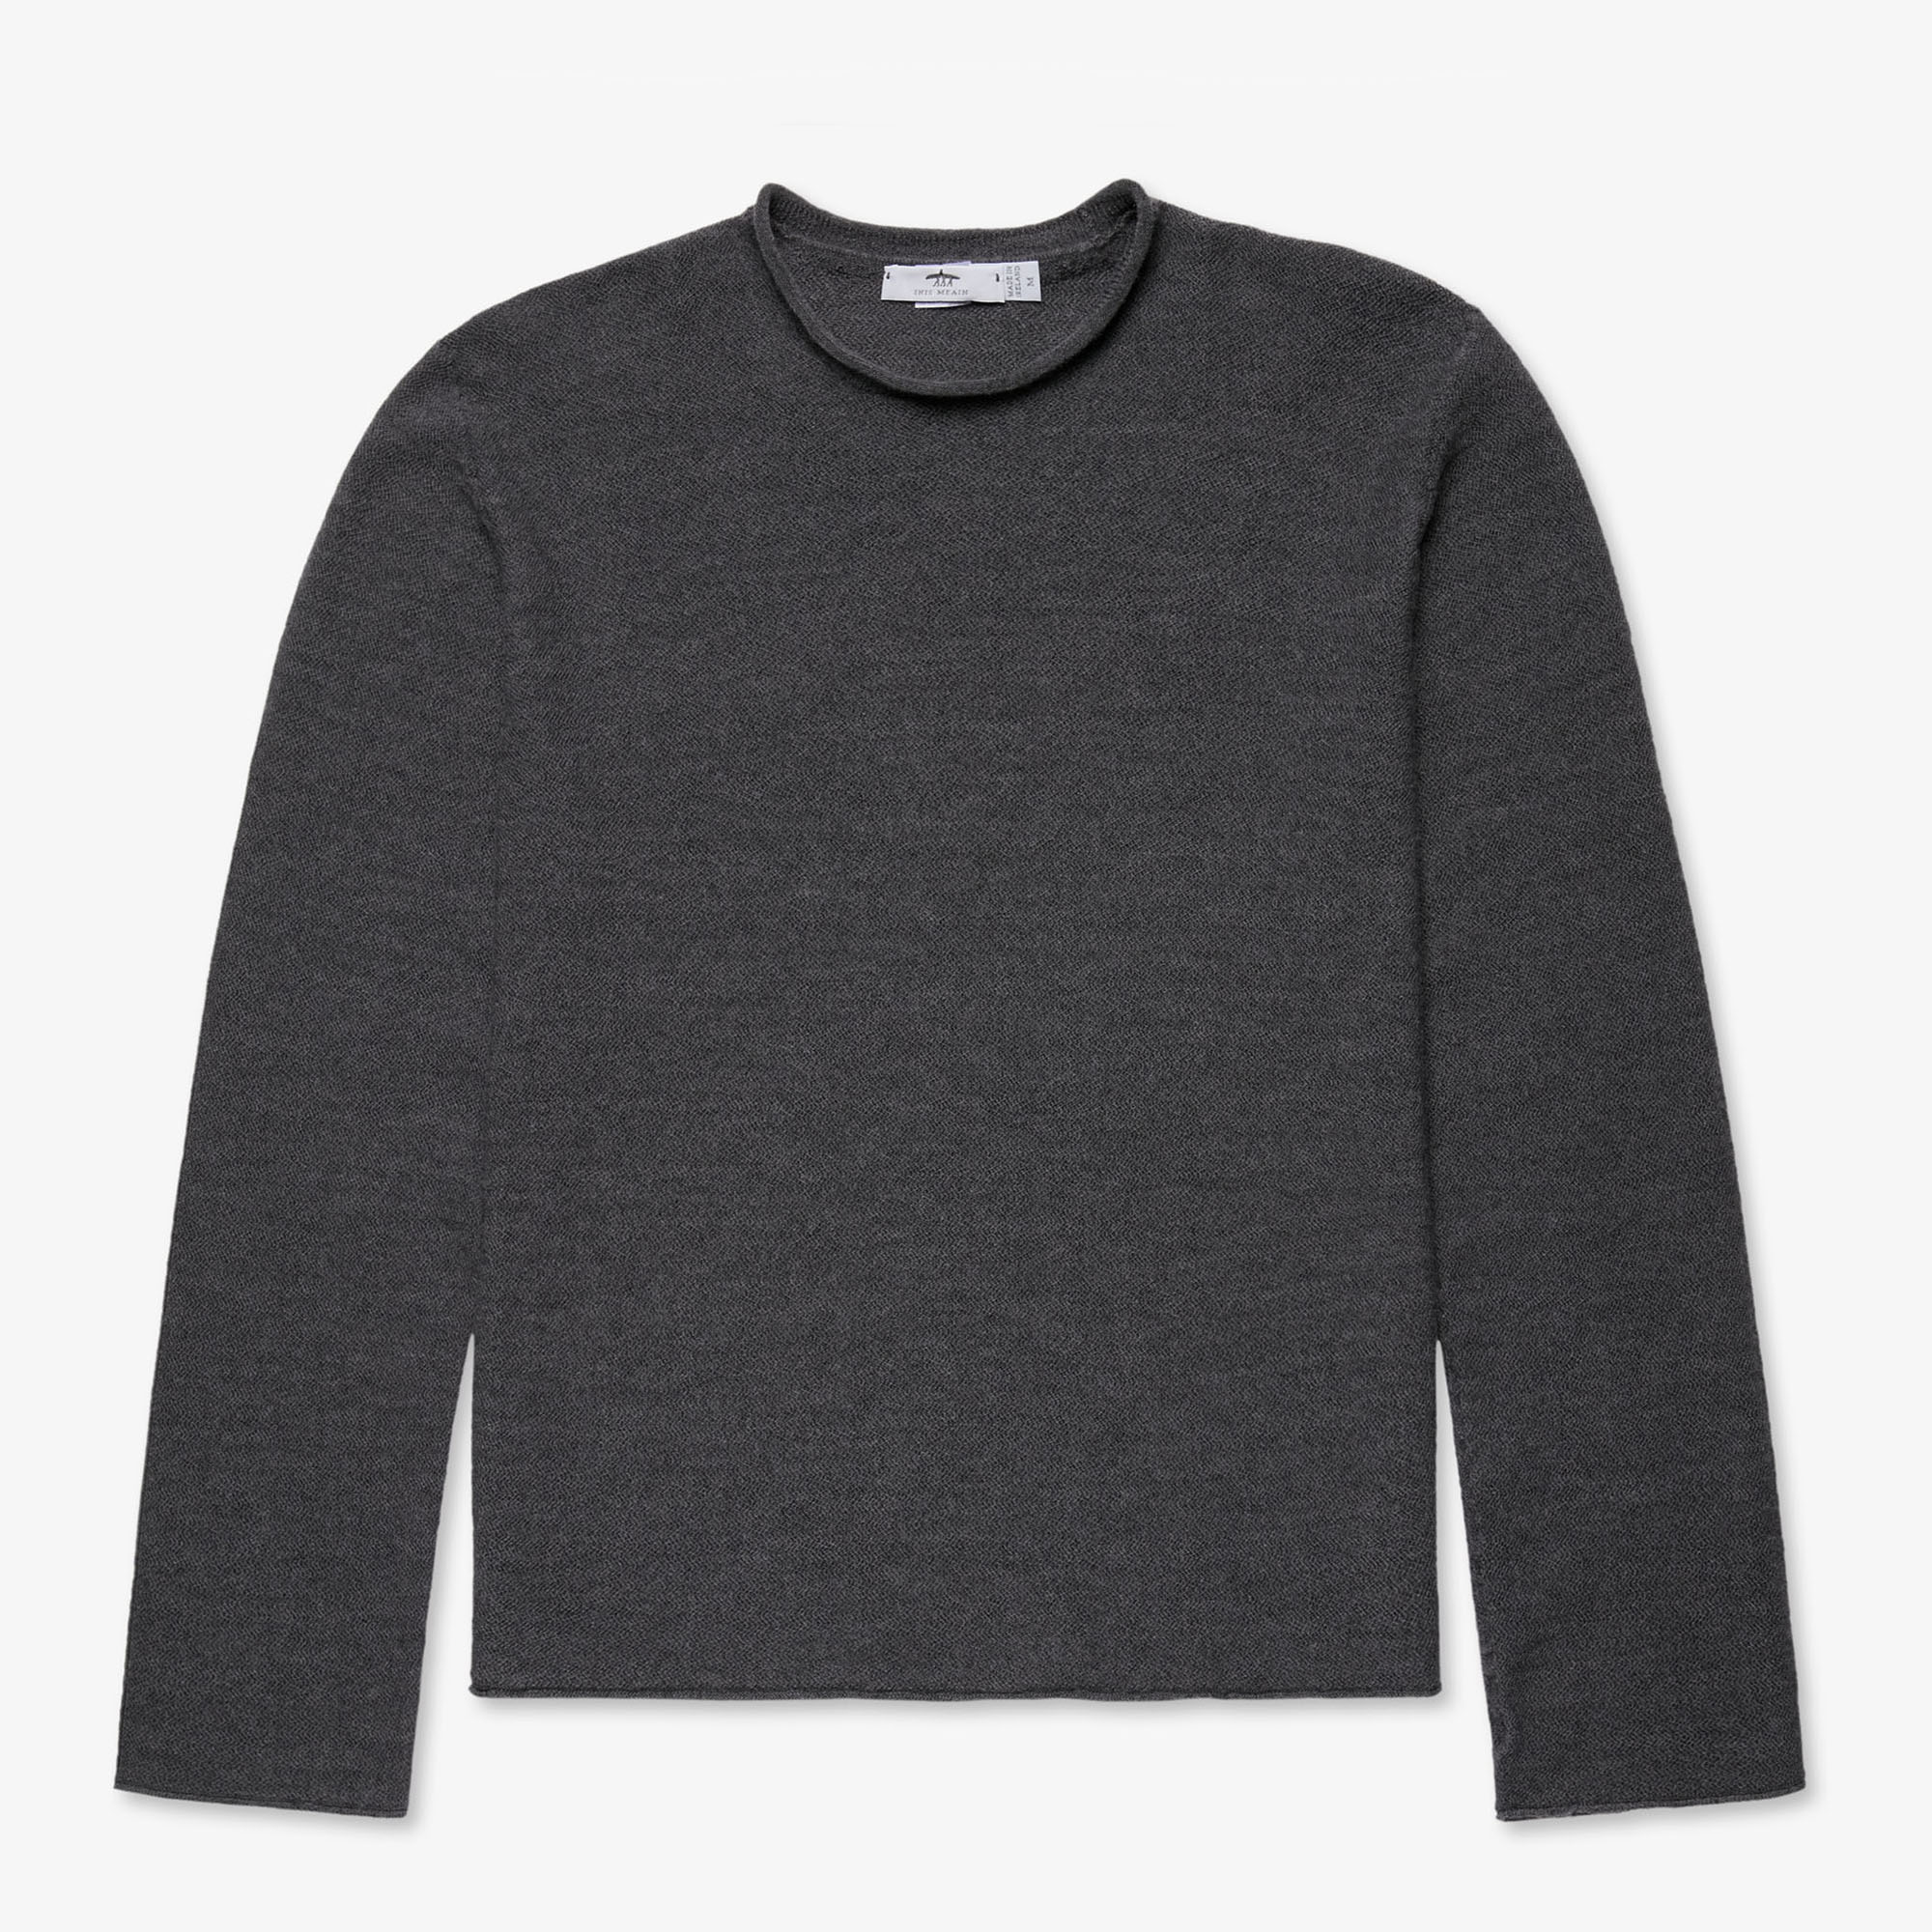 Herringbone Tunic 12g Aran Sweater for Men — Inis Meáin Knitwear